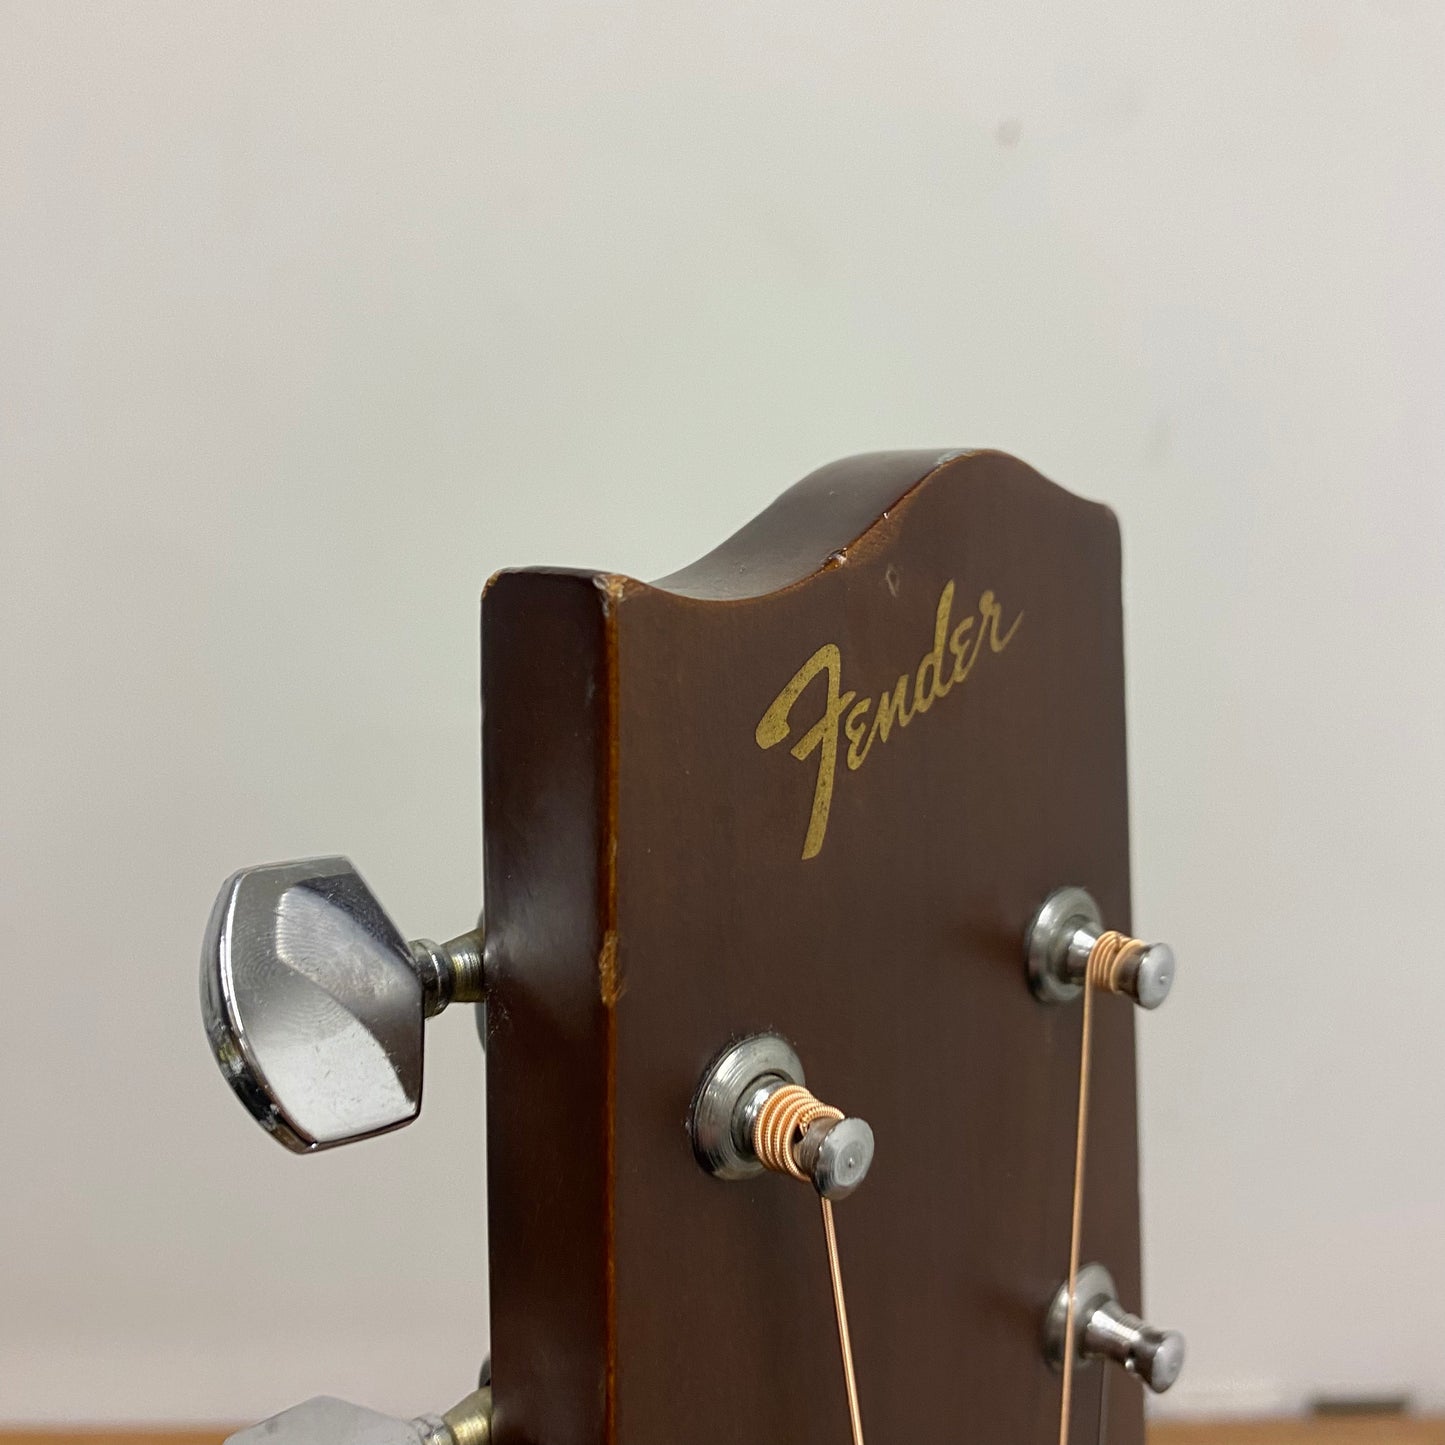 Pre-Owned Fender Gemini II Acoustic - Natural